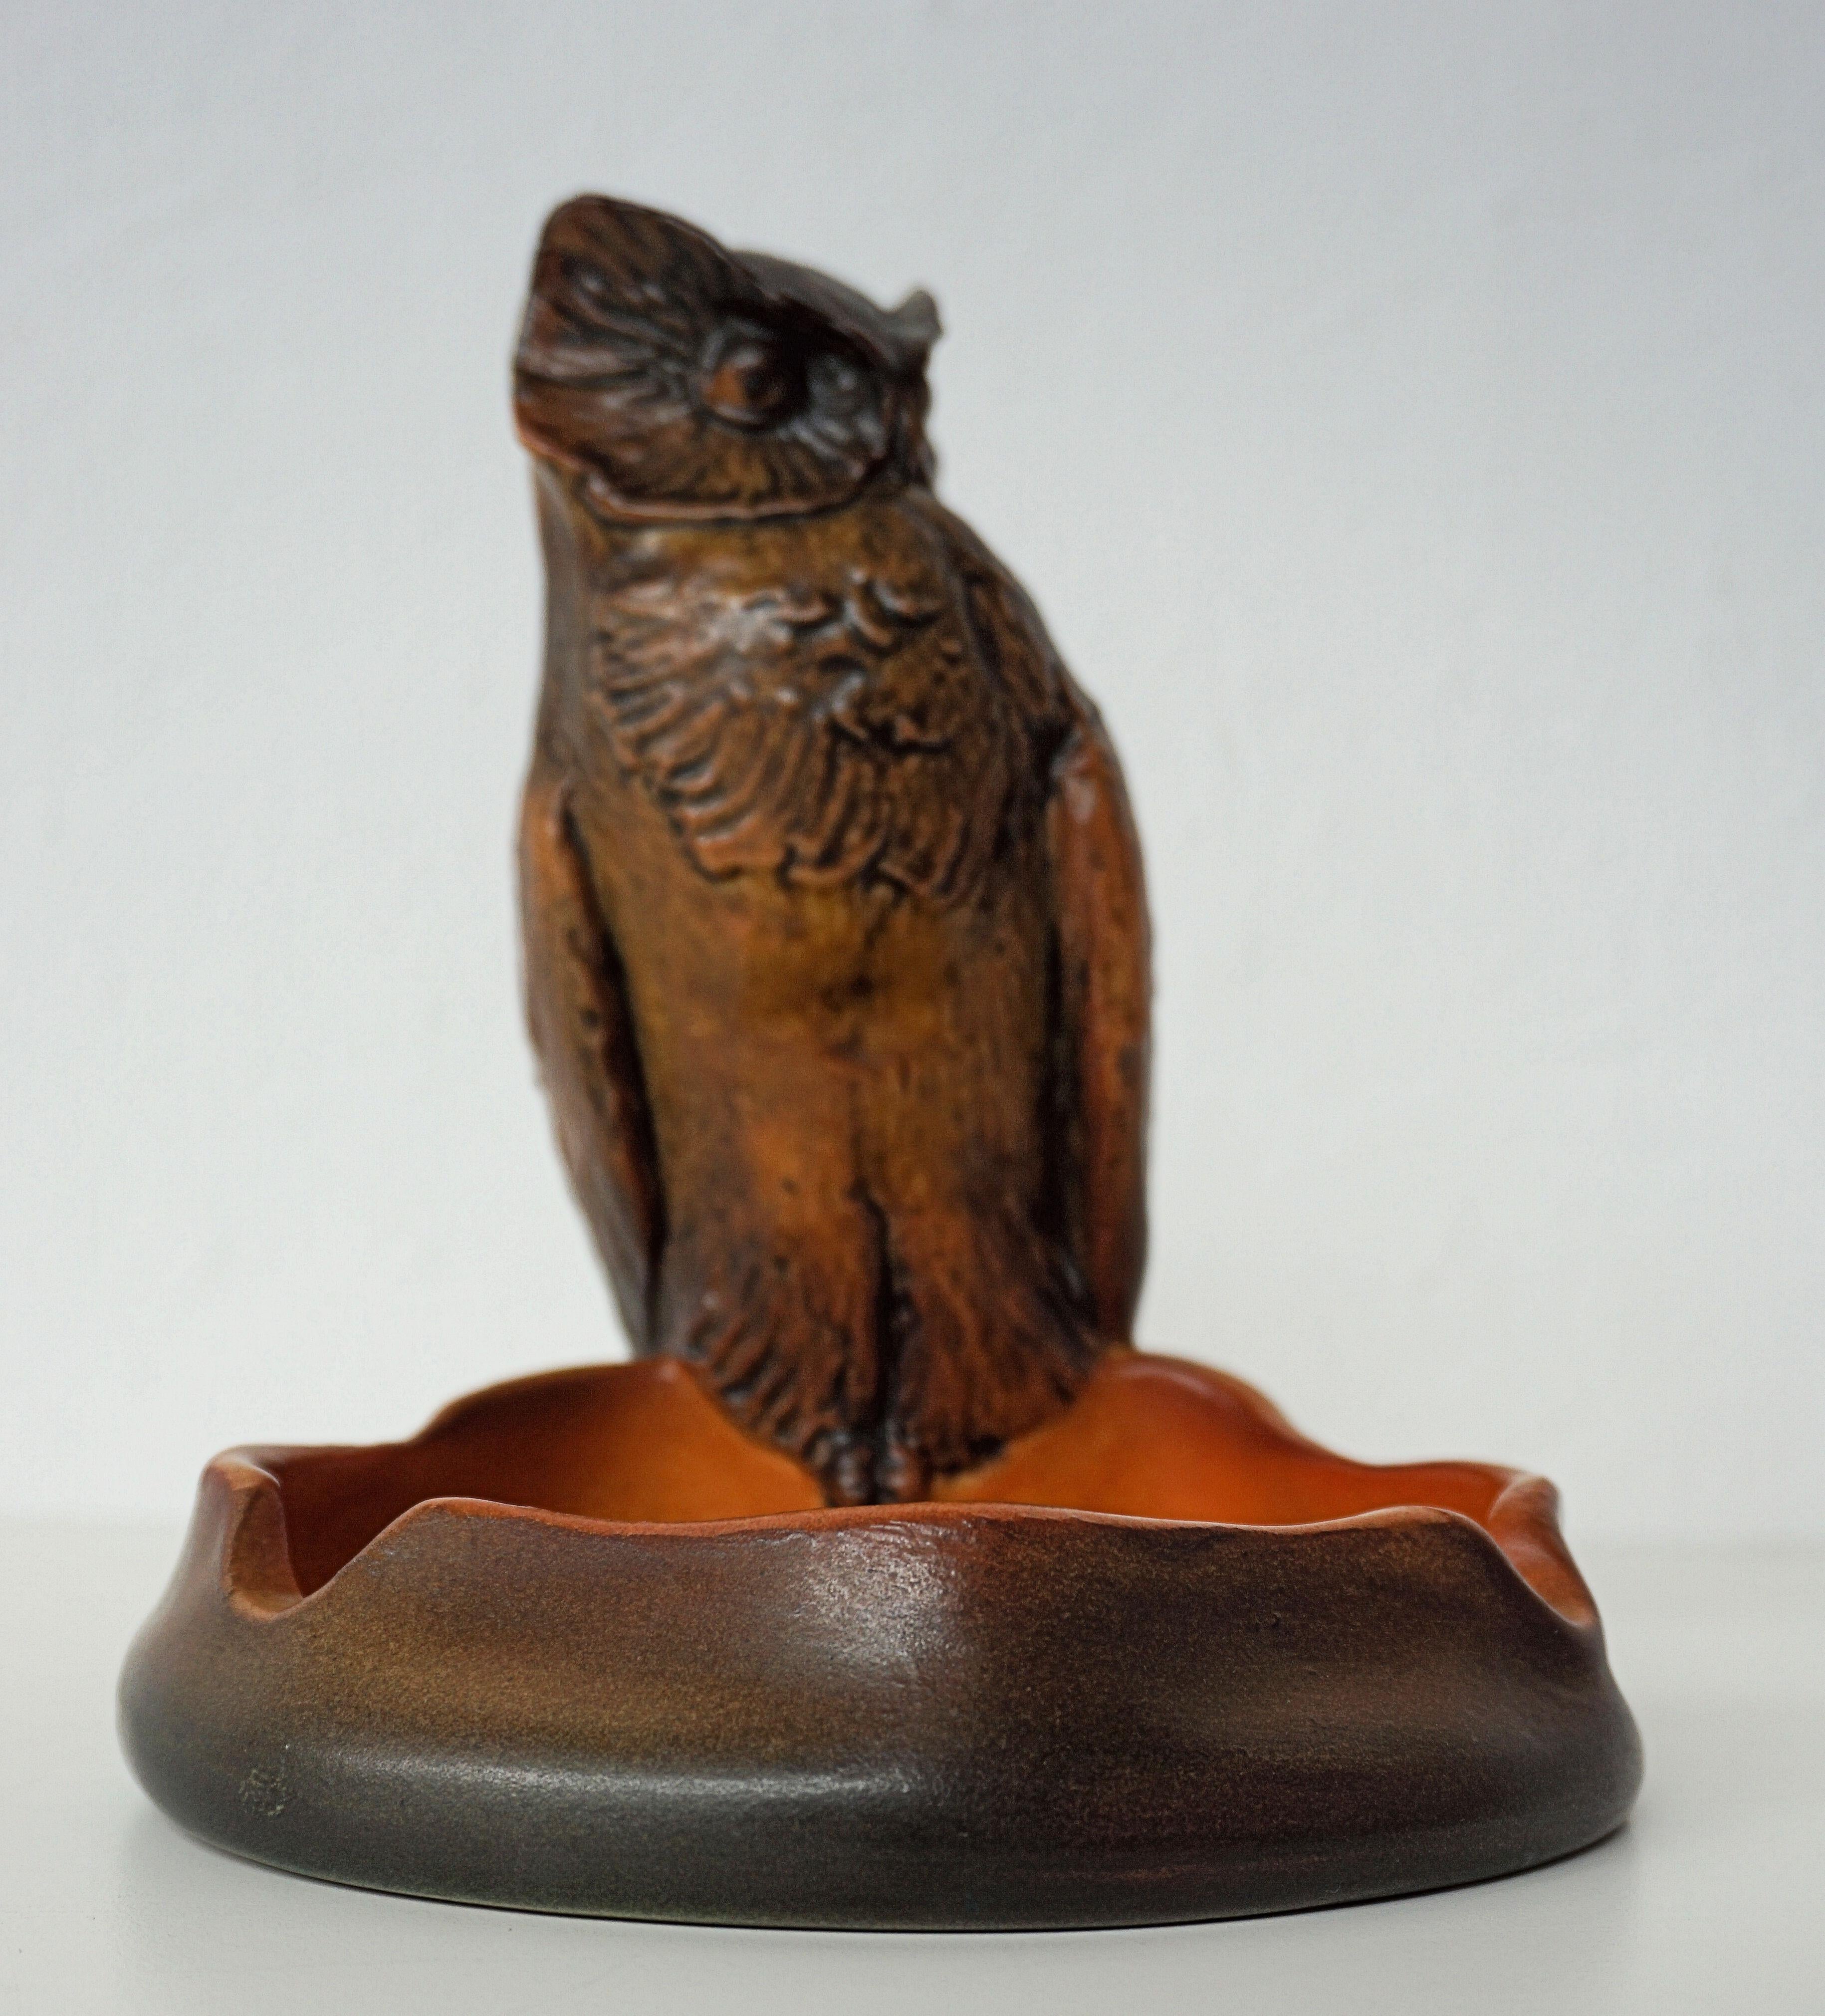 Ceramic 1915 Handcrafted Danish Art Nouveau Owl Bowl by Niels Norvill for Ipsens Enke